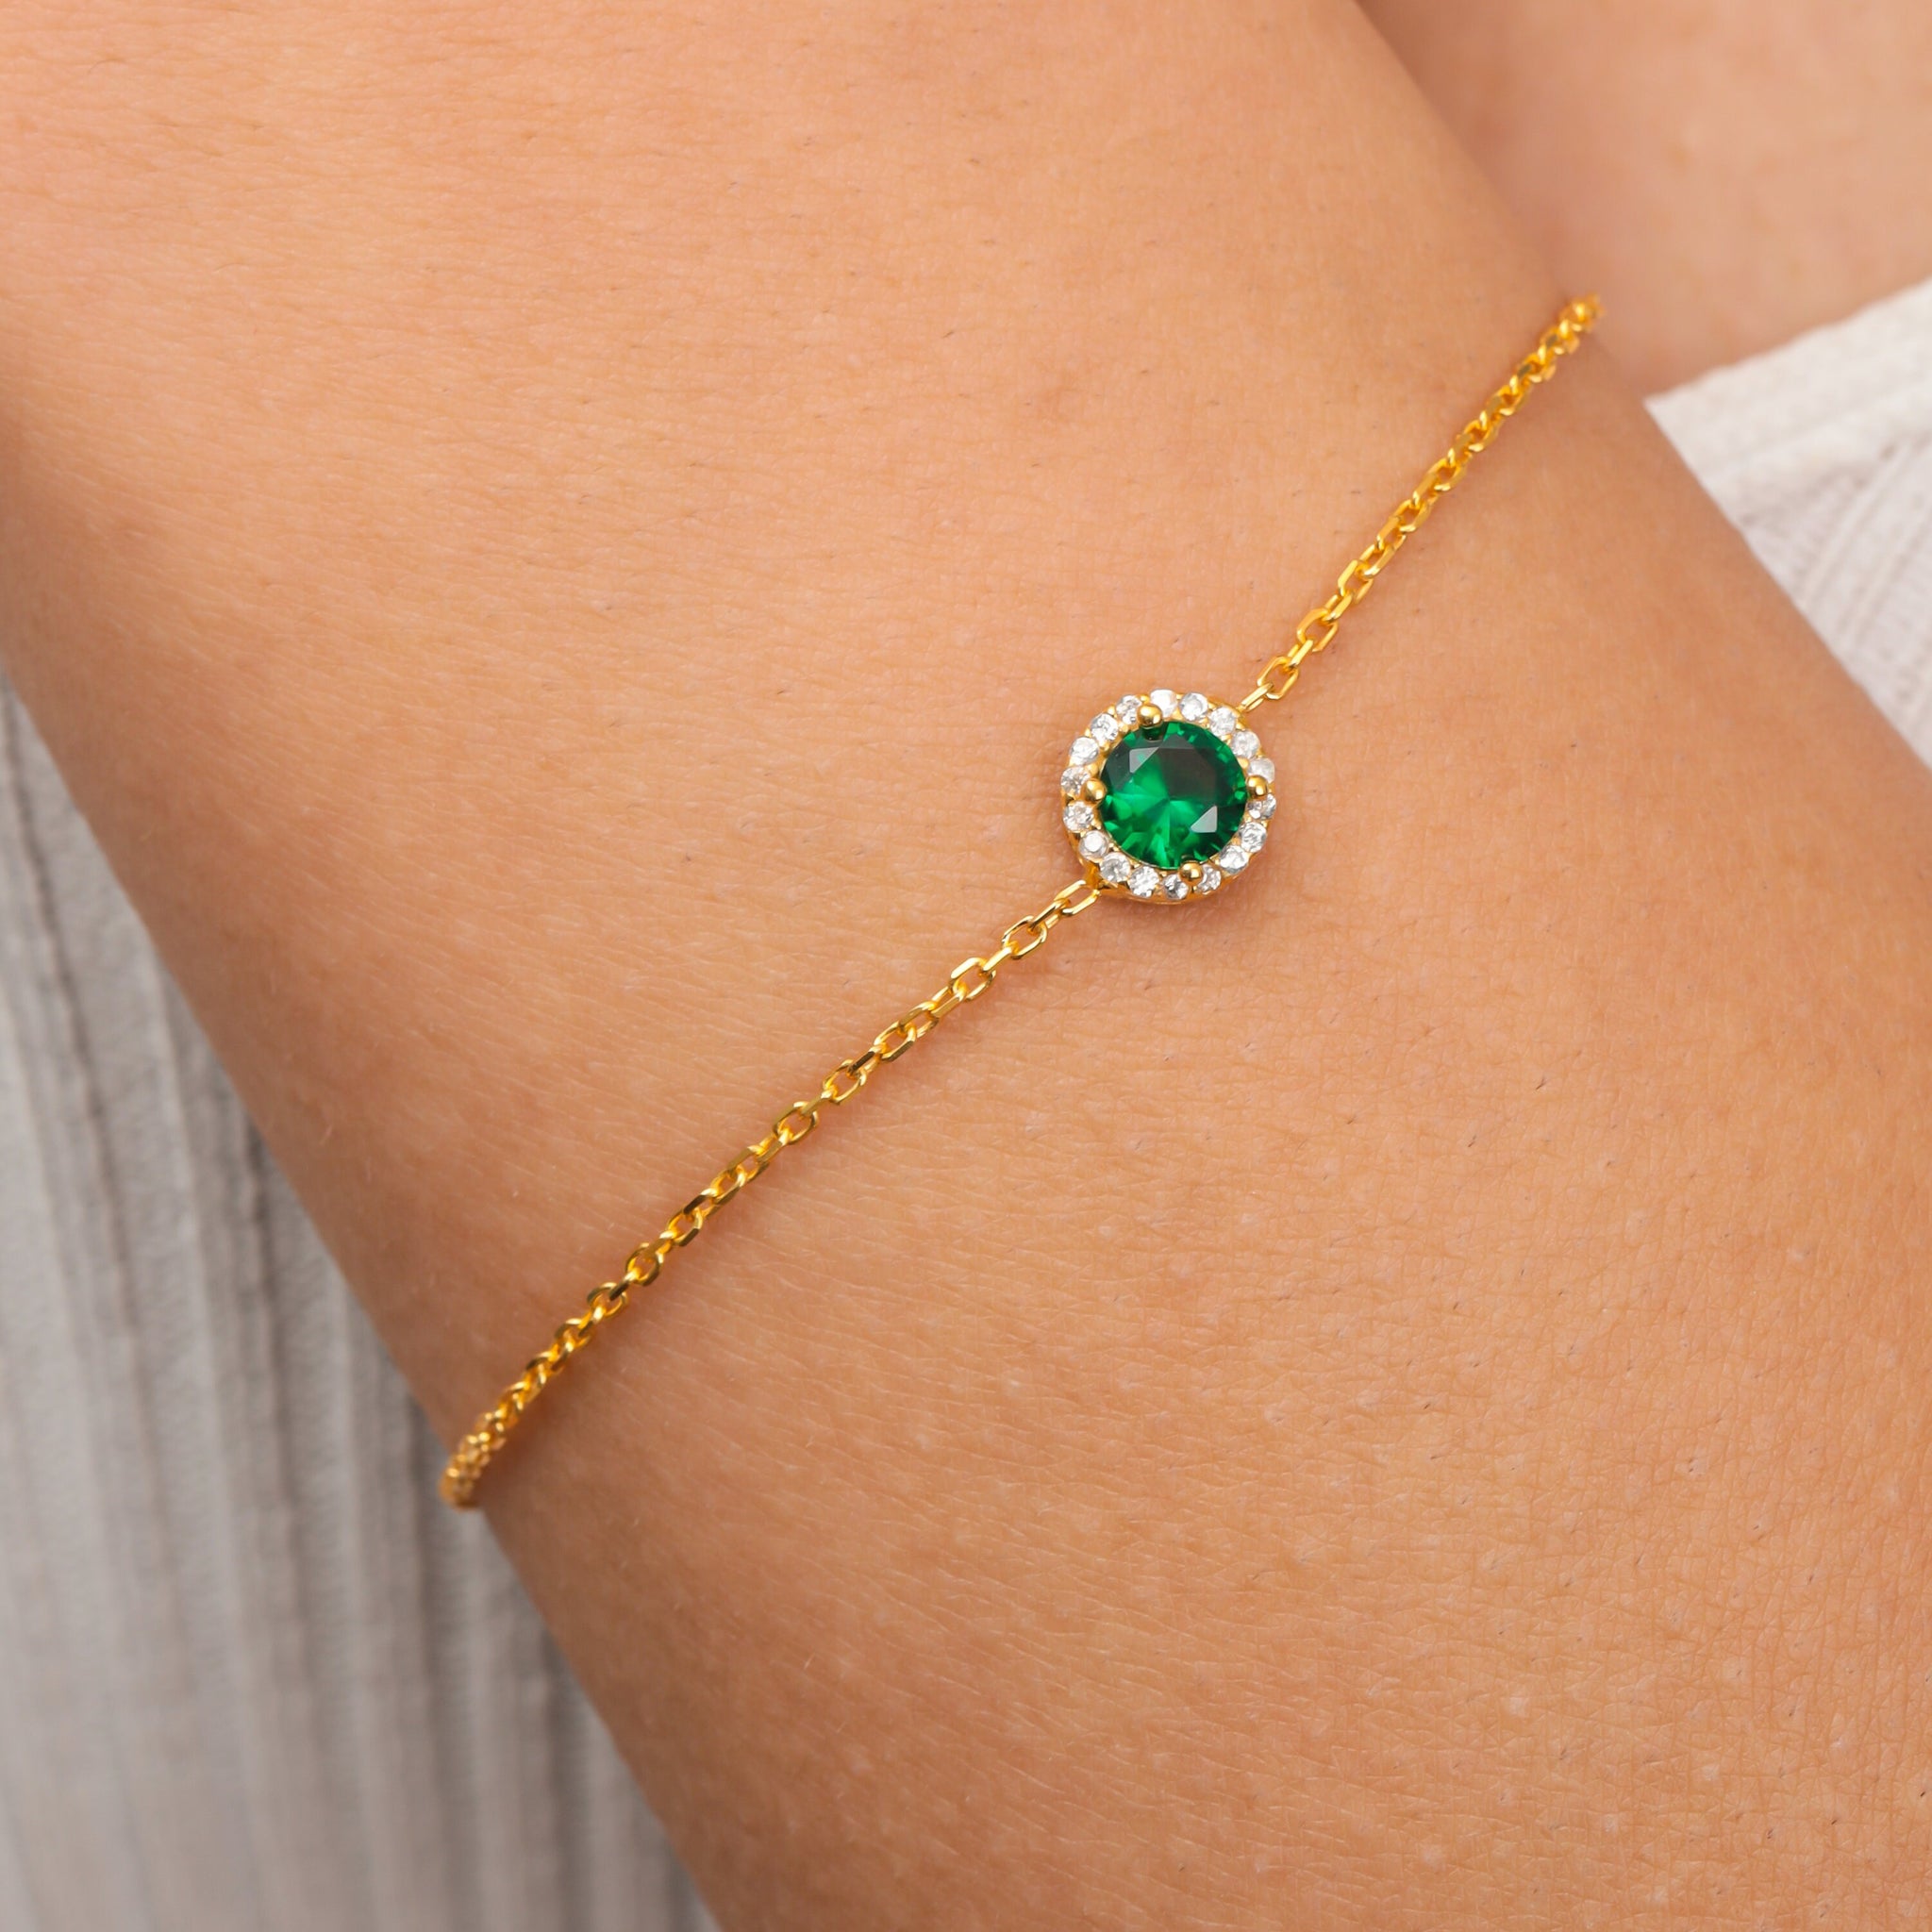 Emerald Bezel Bracelet, Green Emerald Bracelet, May Birthstone Bracelet, Emerald Bangle, Emerald Jewelry Set, Handmade Jewelry, Gift For Her